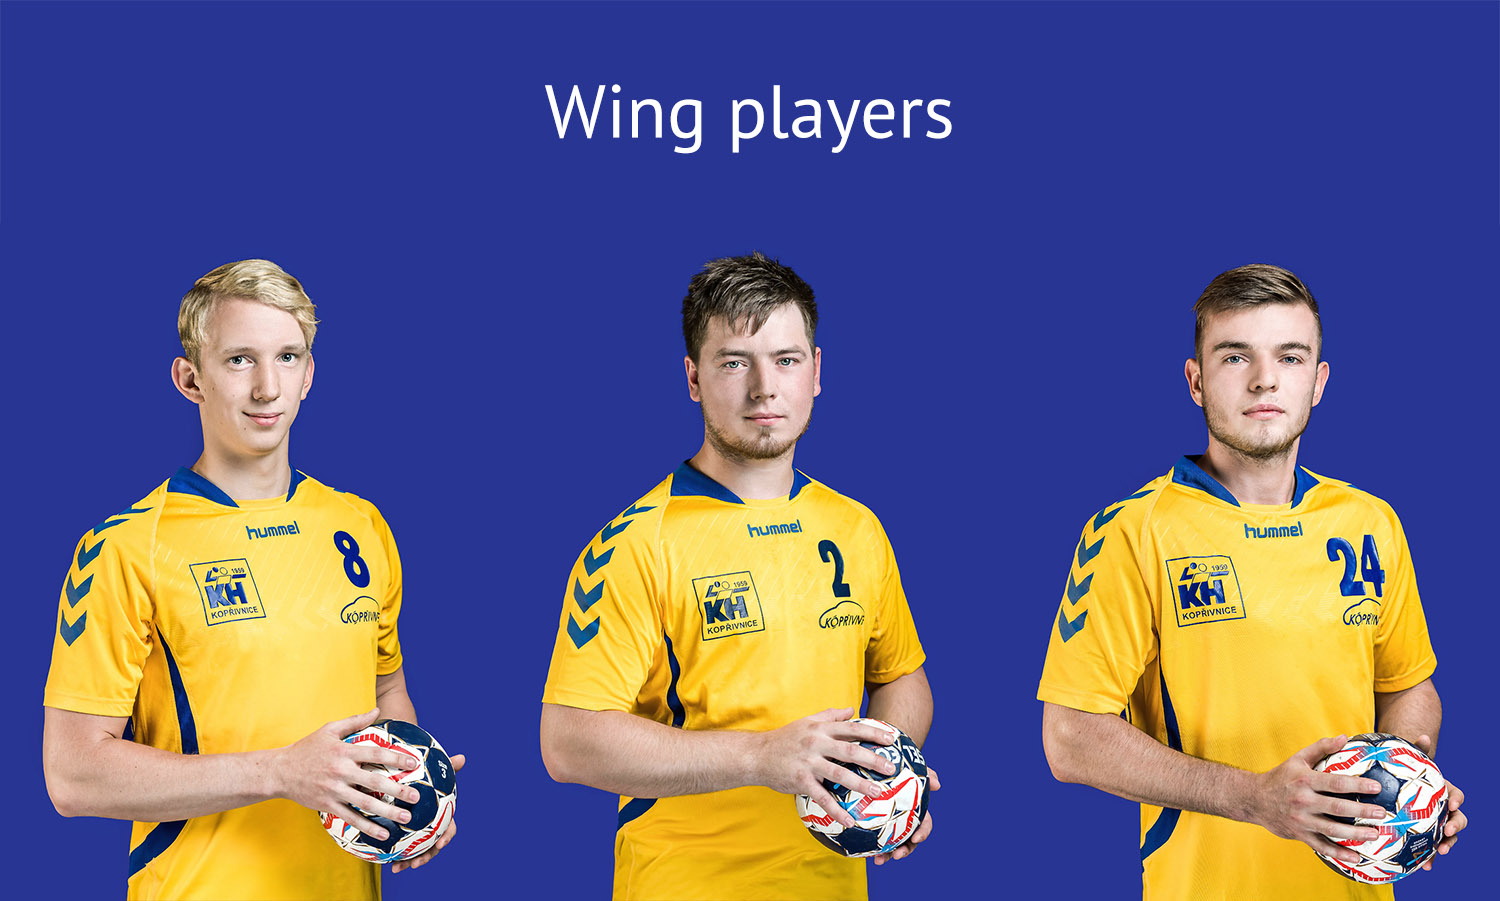 wing_players_02.jpg